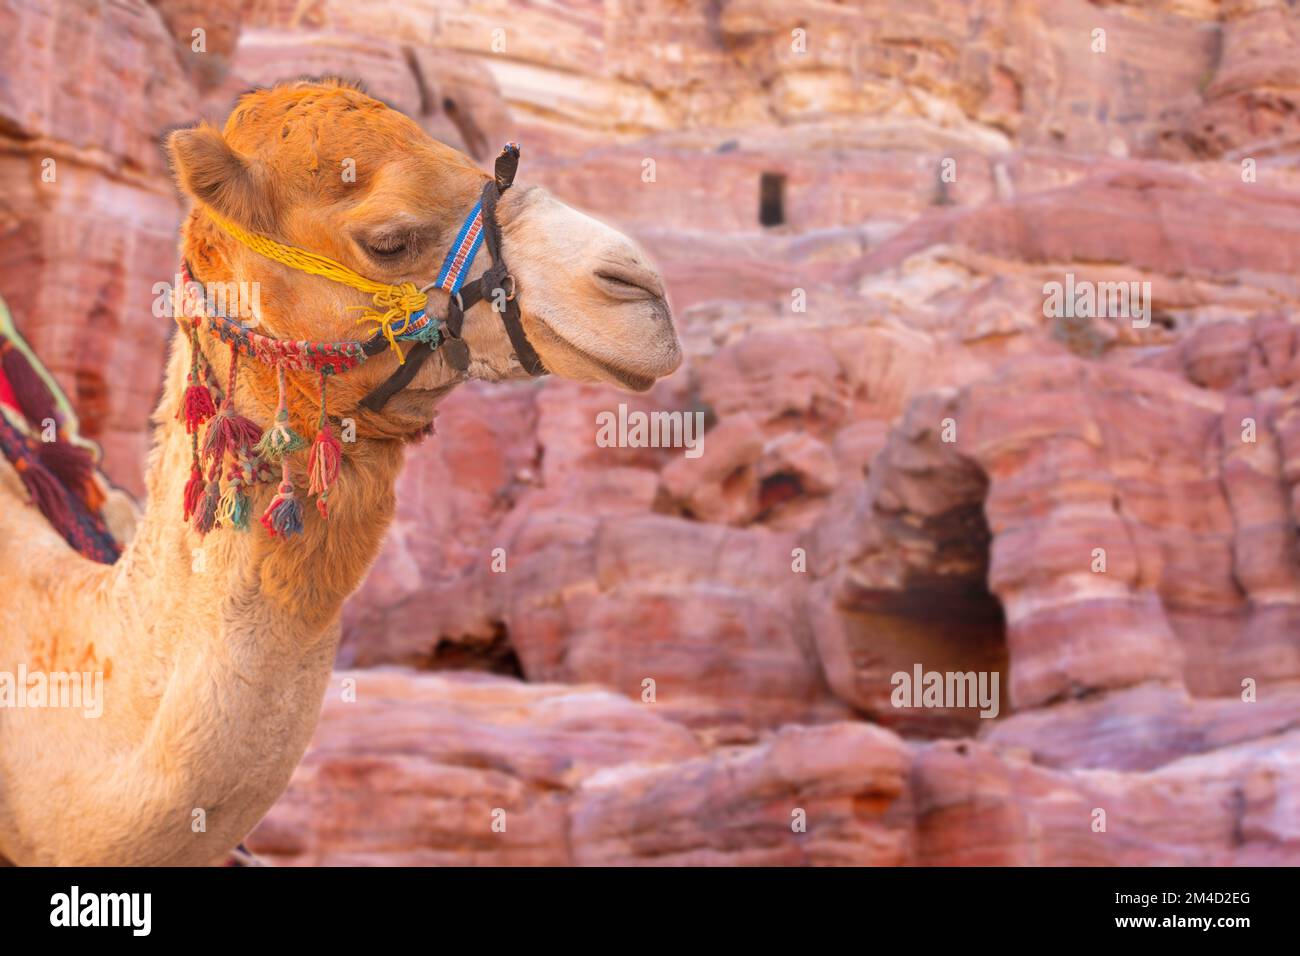 Camel close-up portrait under red rocks in Petra, Jordan Stock Photo